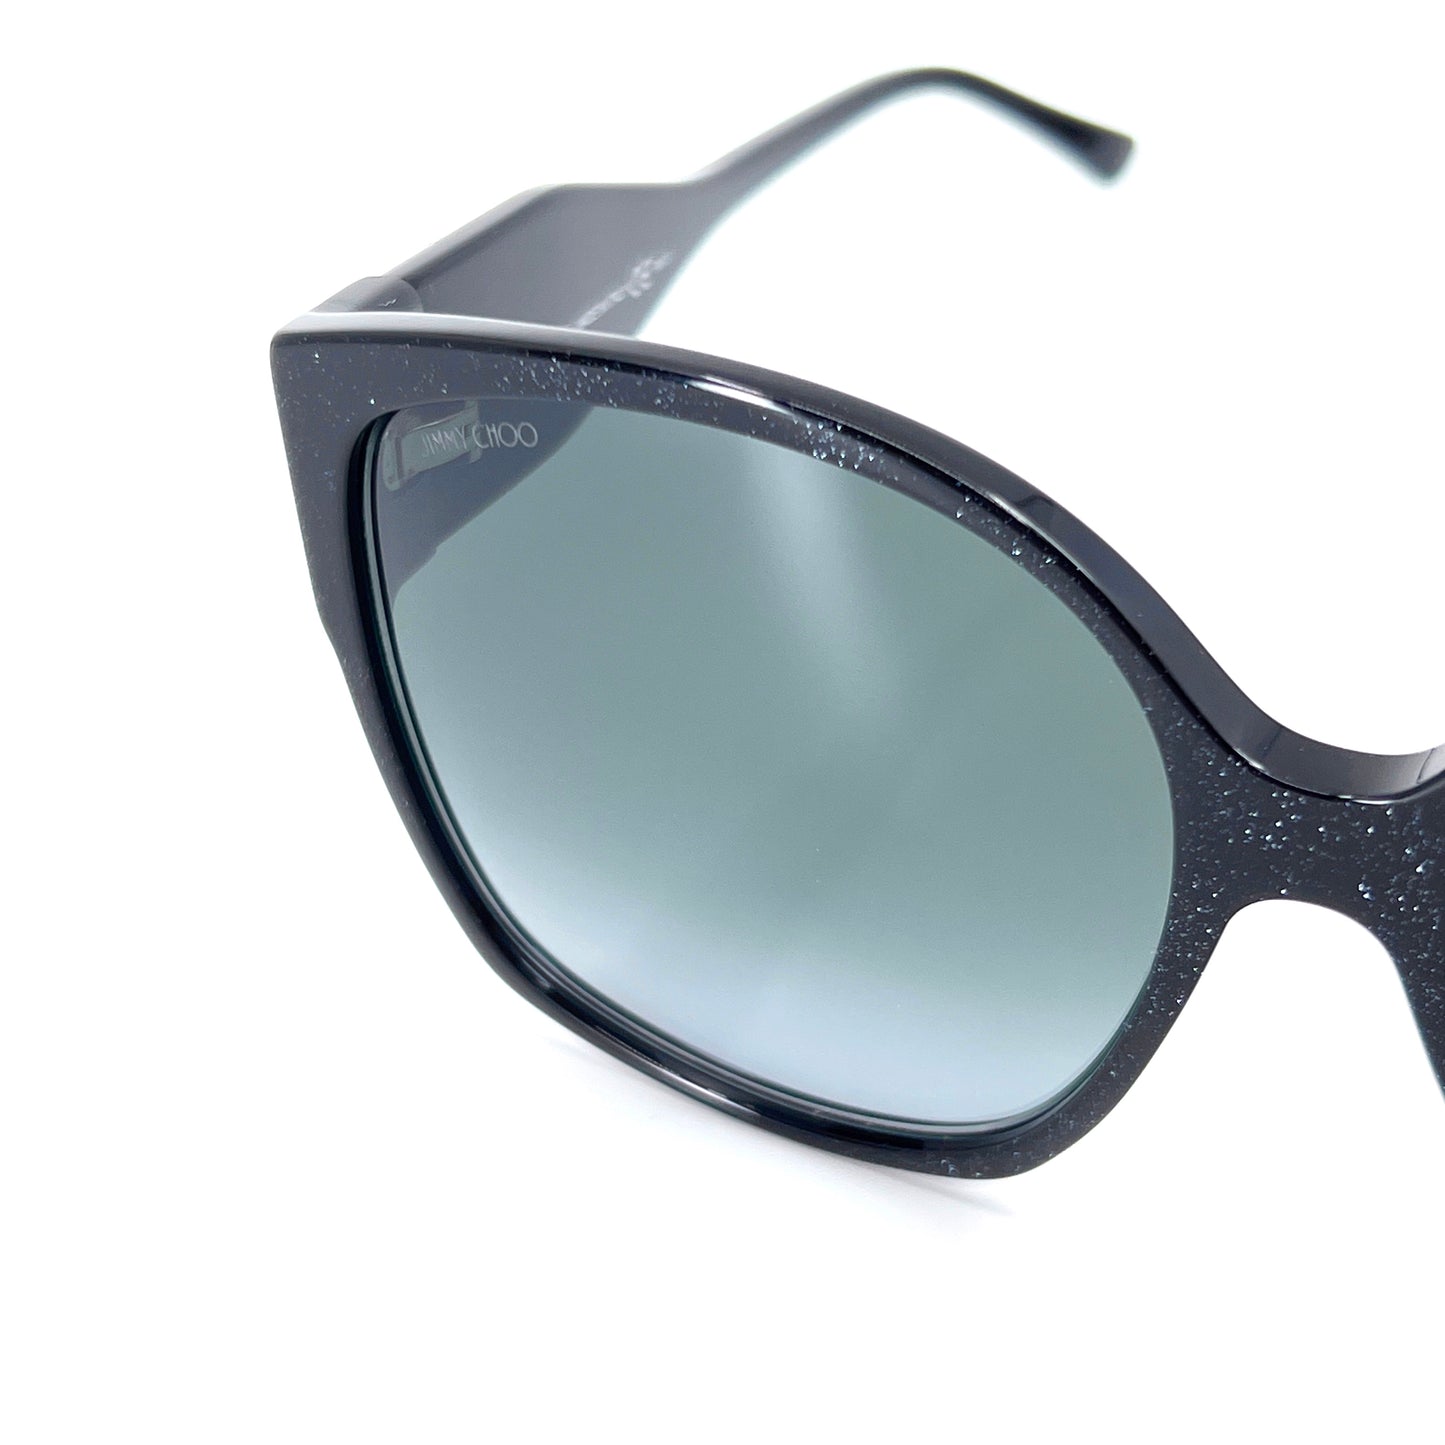 JIMMY CHOO Sunglasses NOEMI/S DXF90